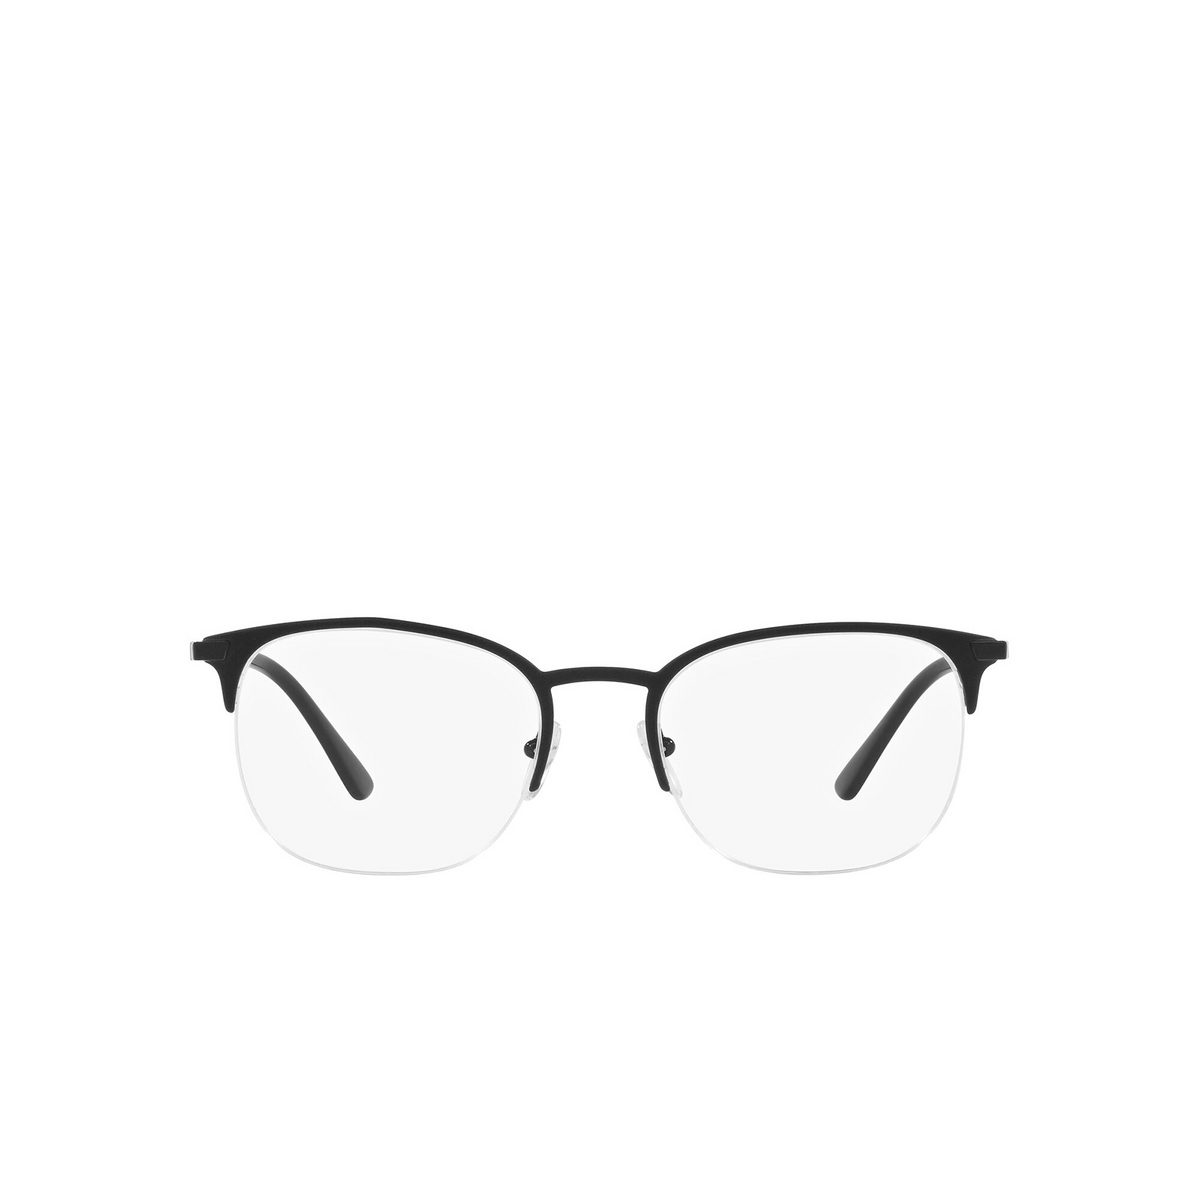 Prada® Oval Eyeglasses: PR 57YV color Black 07F1O1 - front view.